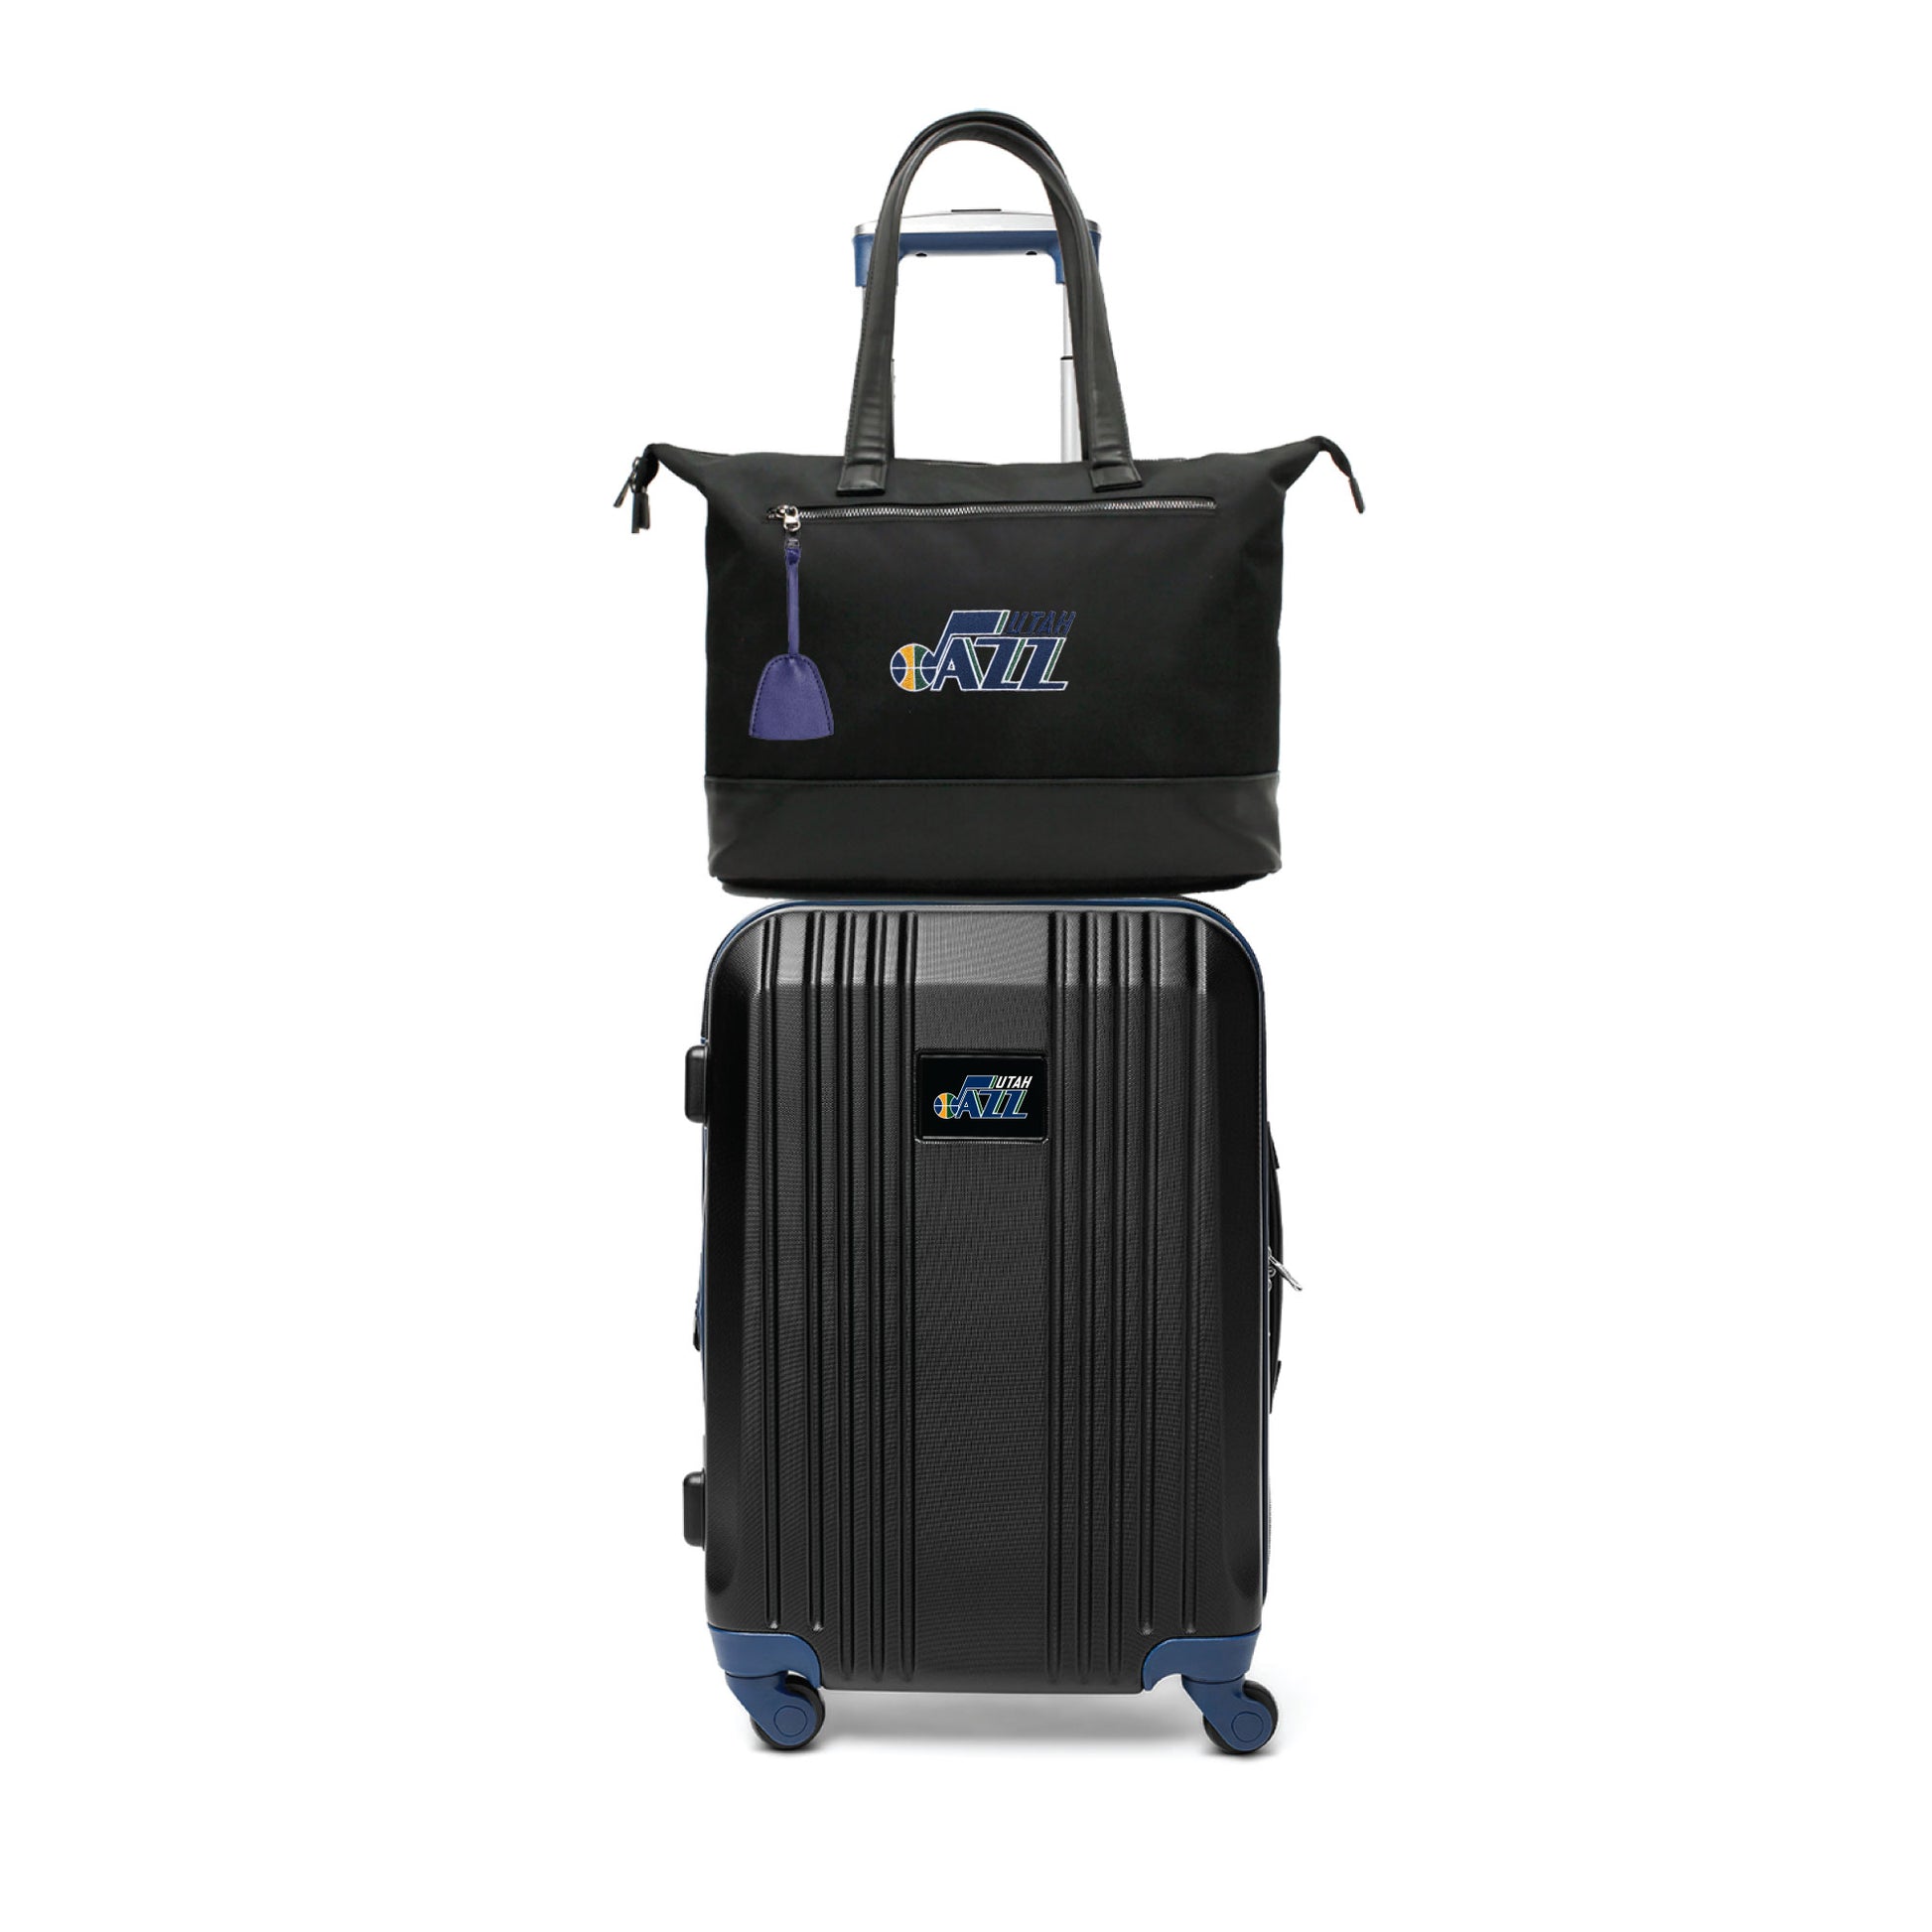 Utah Jazz Premium Laptop Tote Bag and Luggage Set